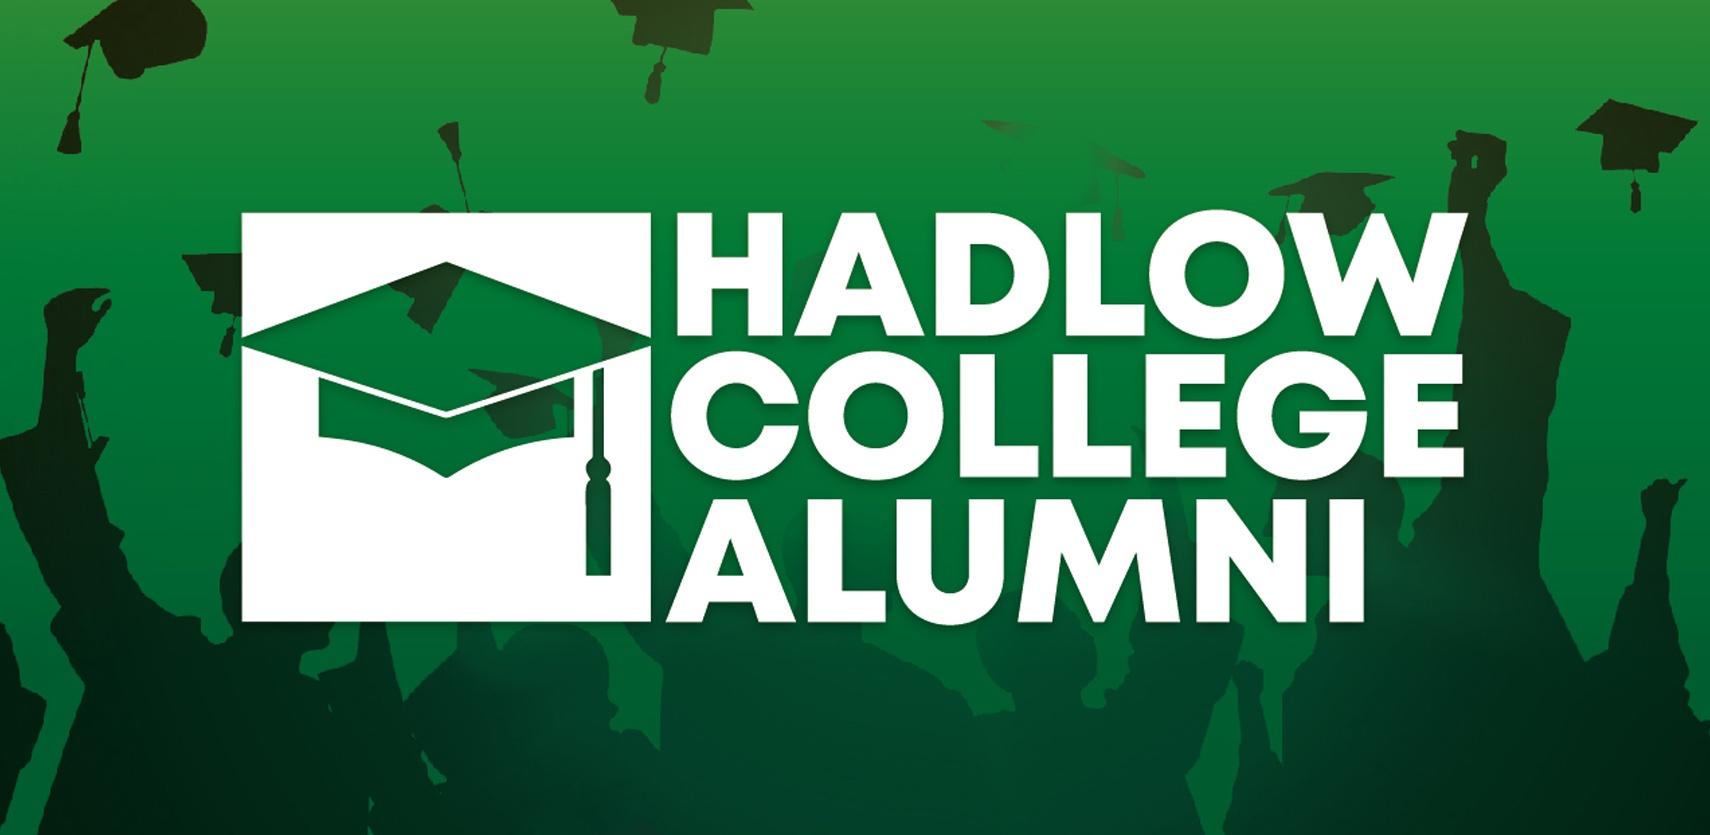 Hadlow alumni graphic